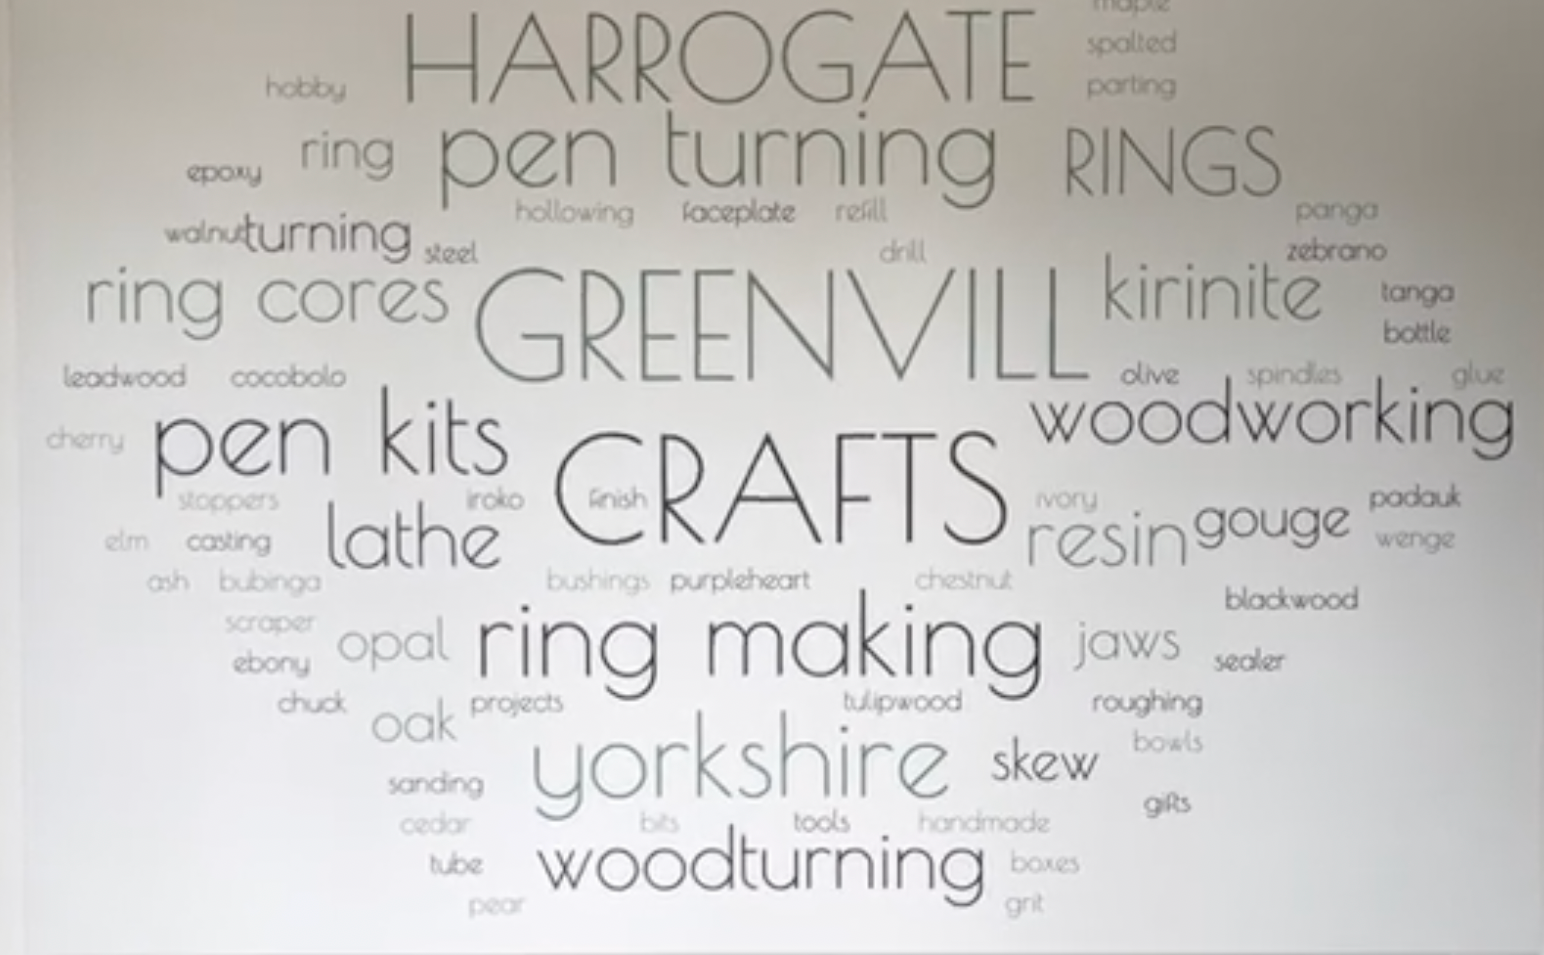 A tour around Greenvill Crafts, Harrogate Greenvill Crafts